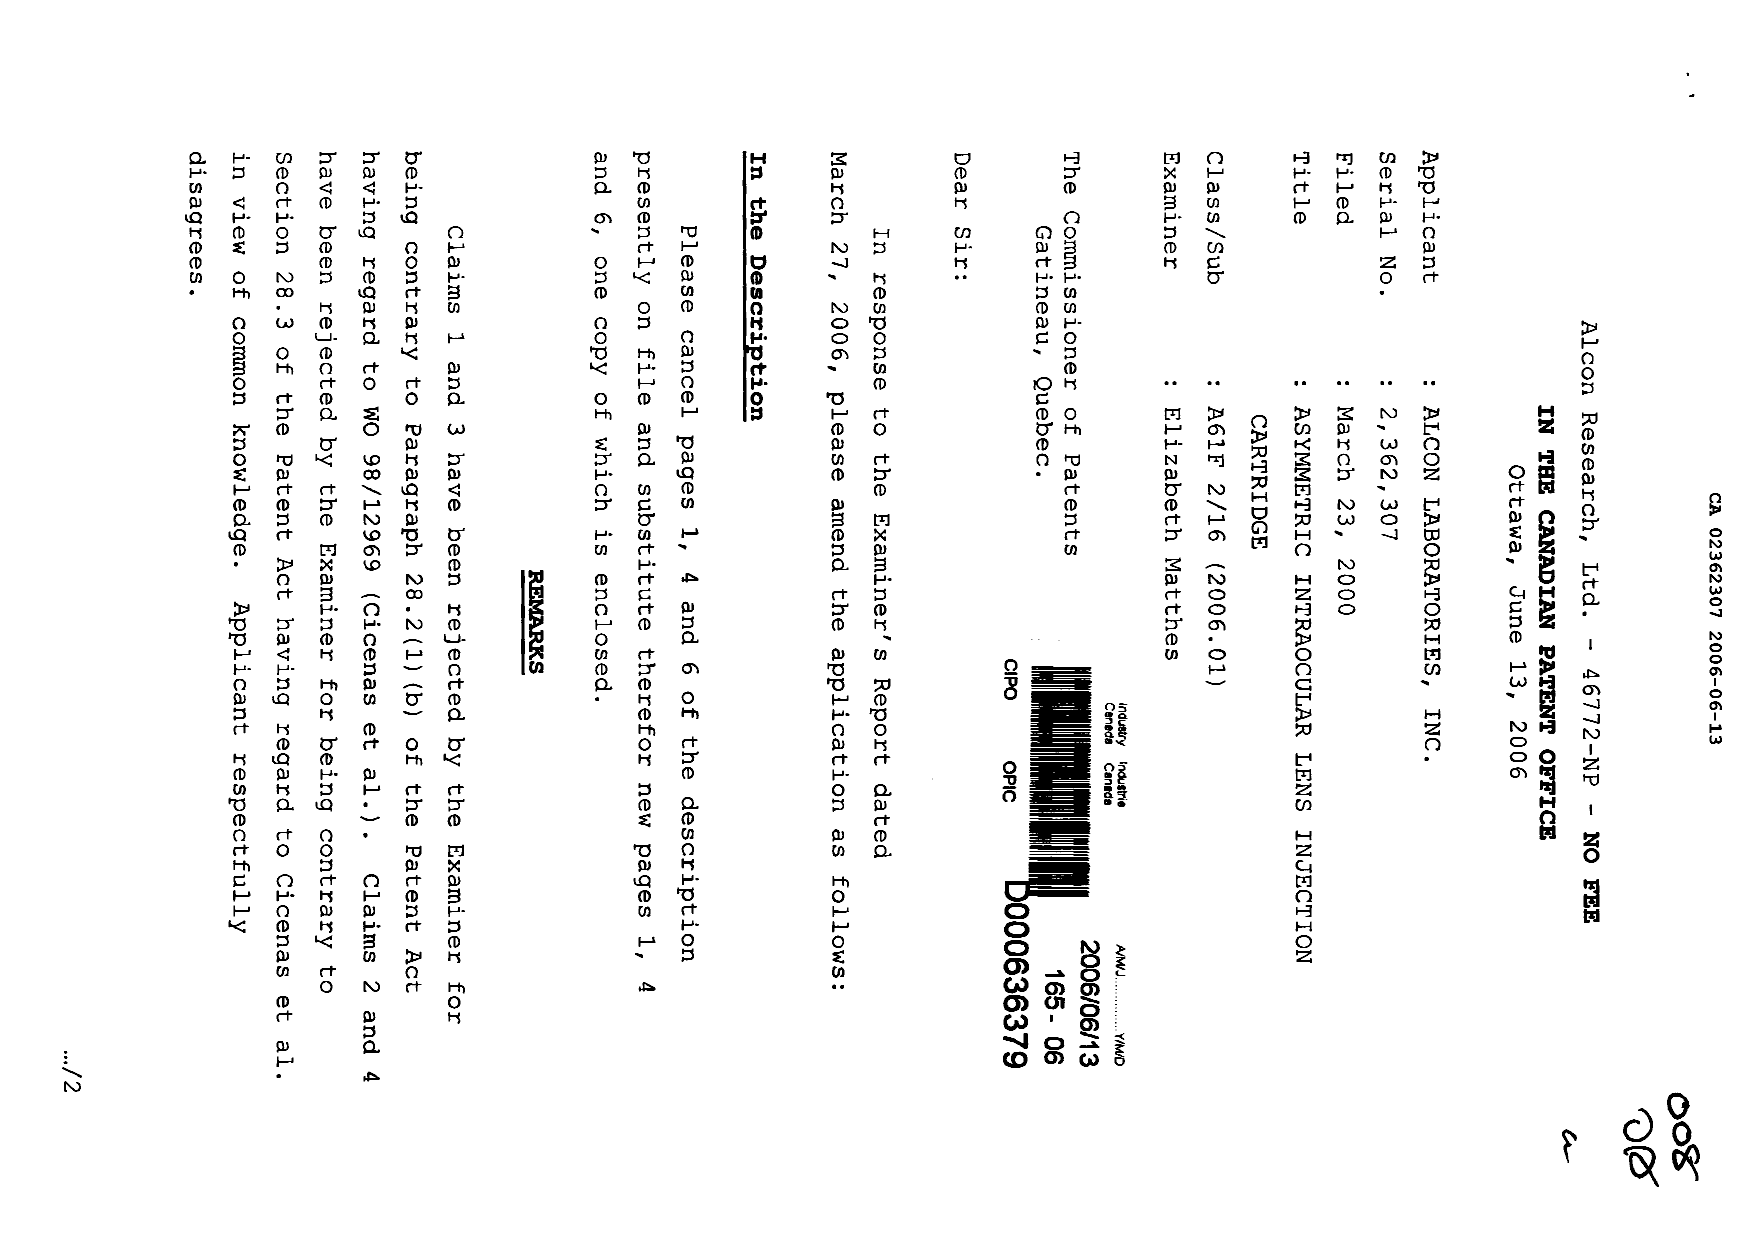 Canadian Patent Document 2362307. Prosecution-Amendment 20051213. Image 1 of 6